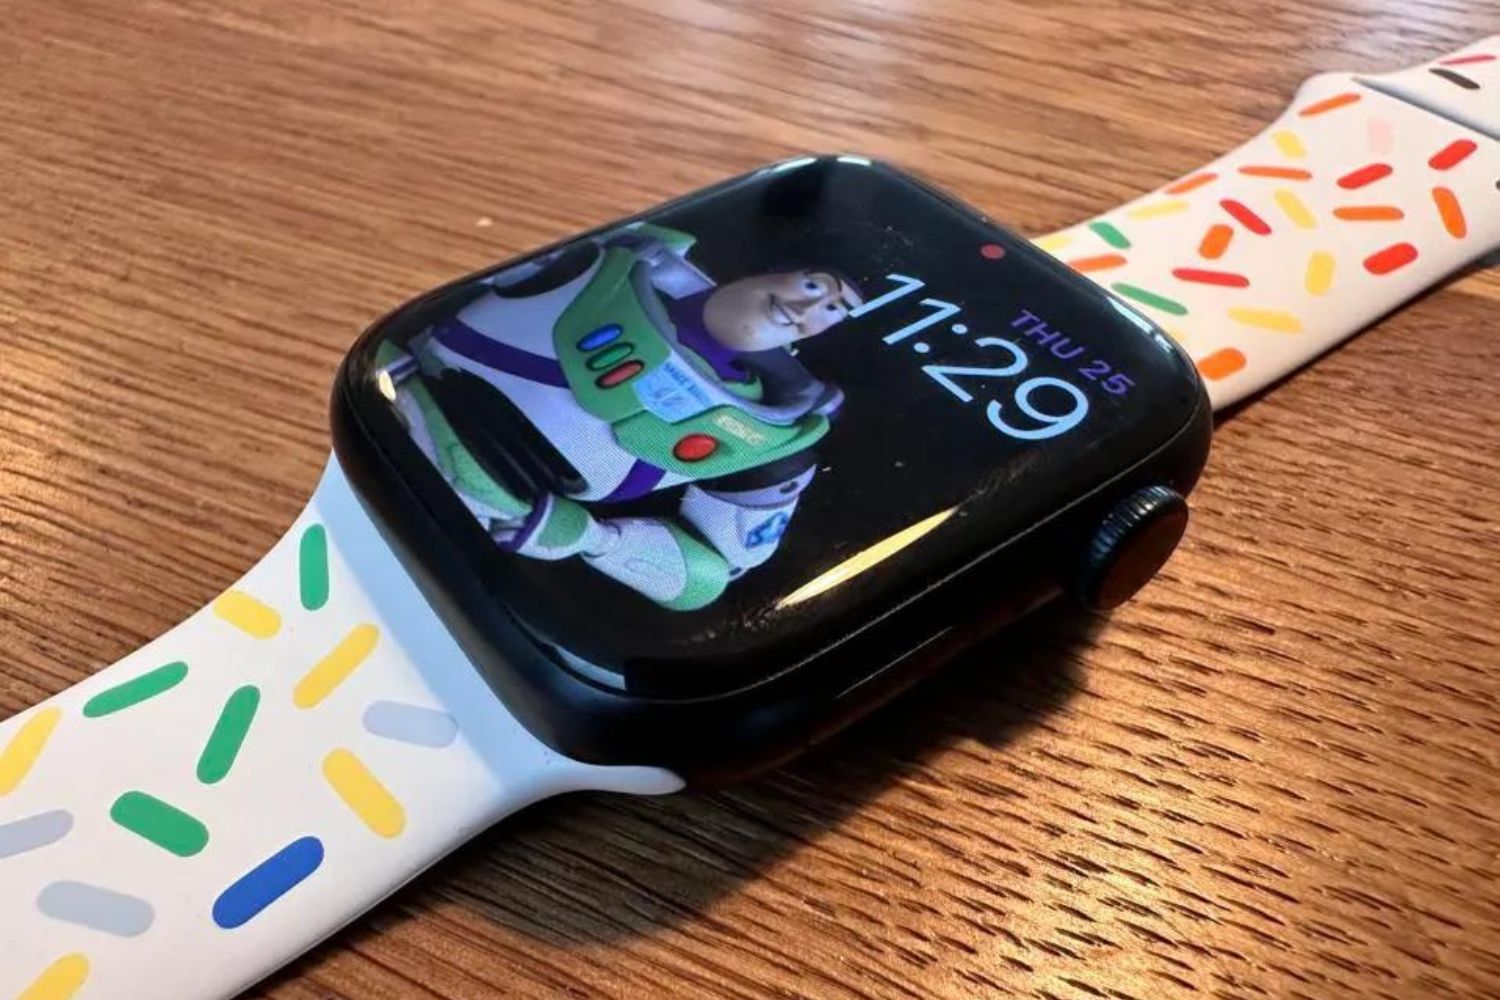 Agora vai? Apple Watch Series 8 deverá adotar design plano - MacMagazine